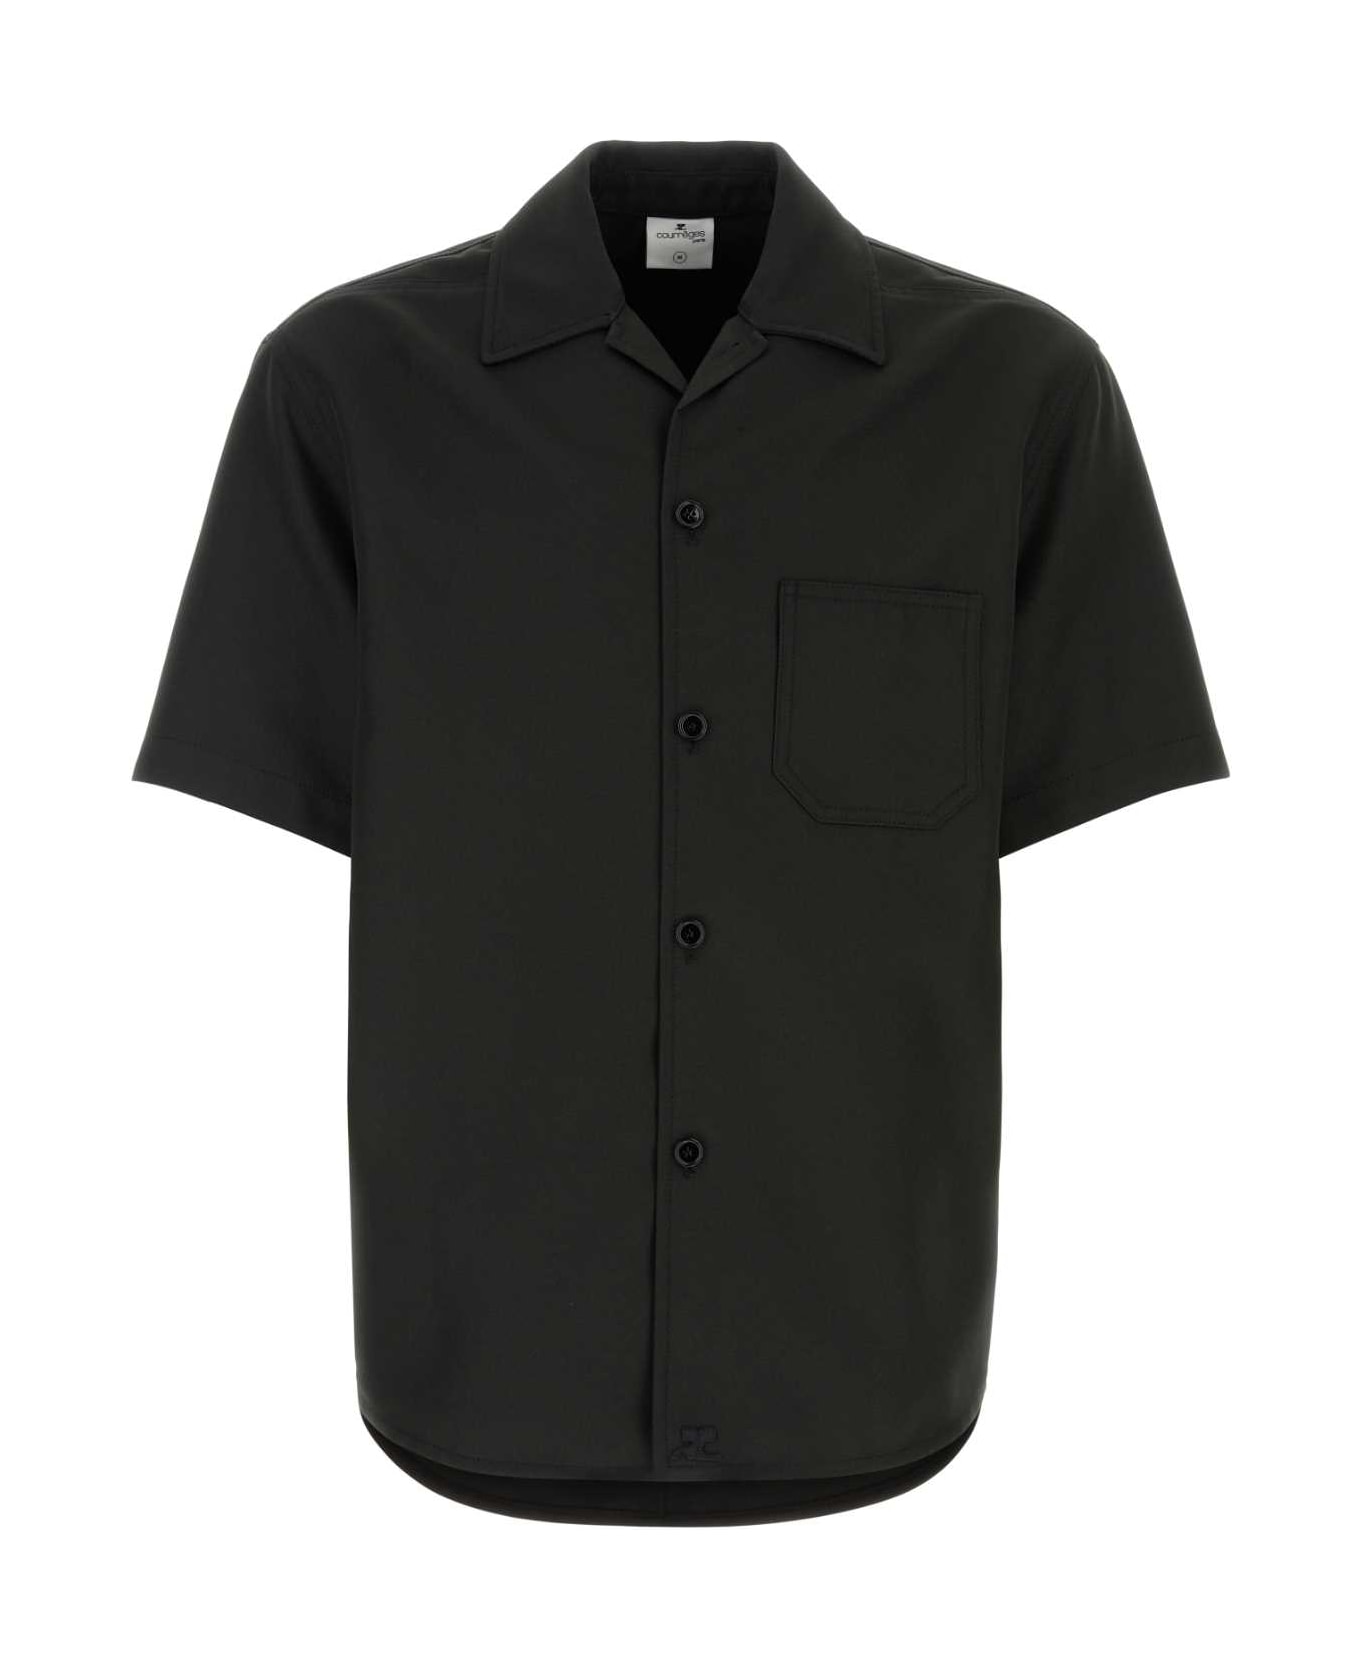 Courrèges Black Polyester Shirt - Black